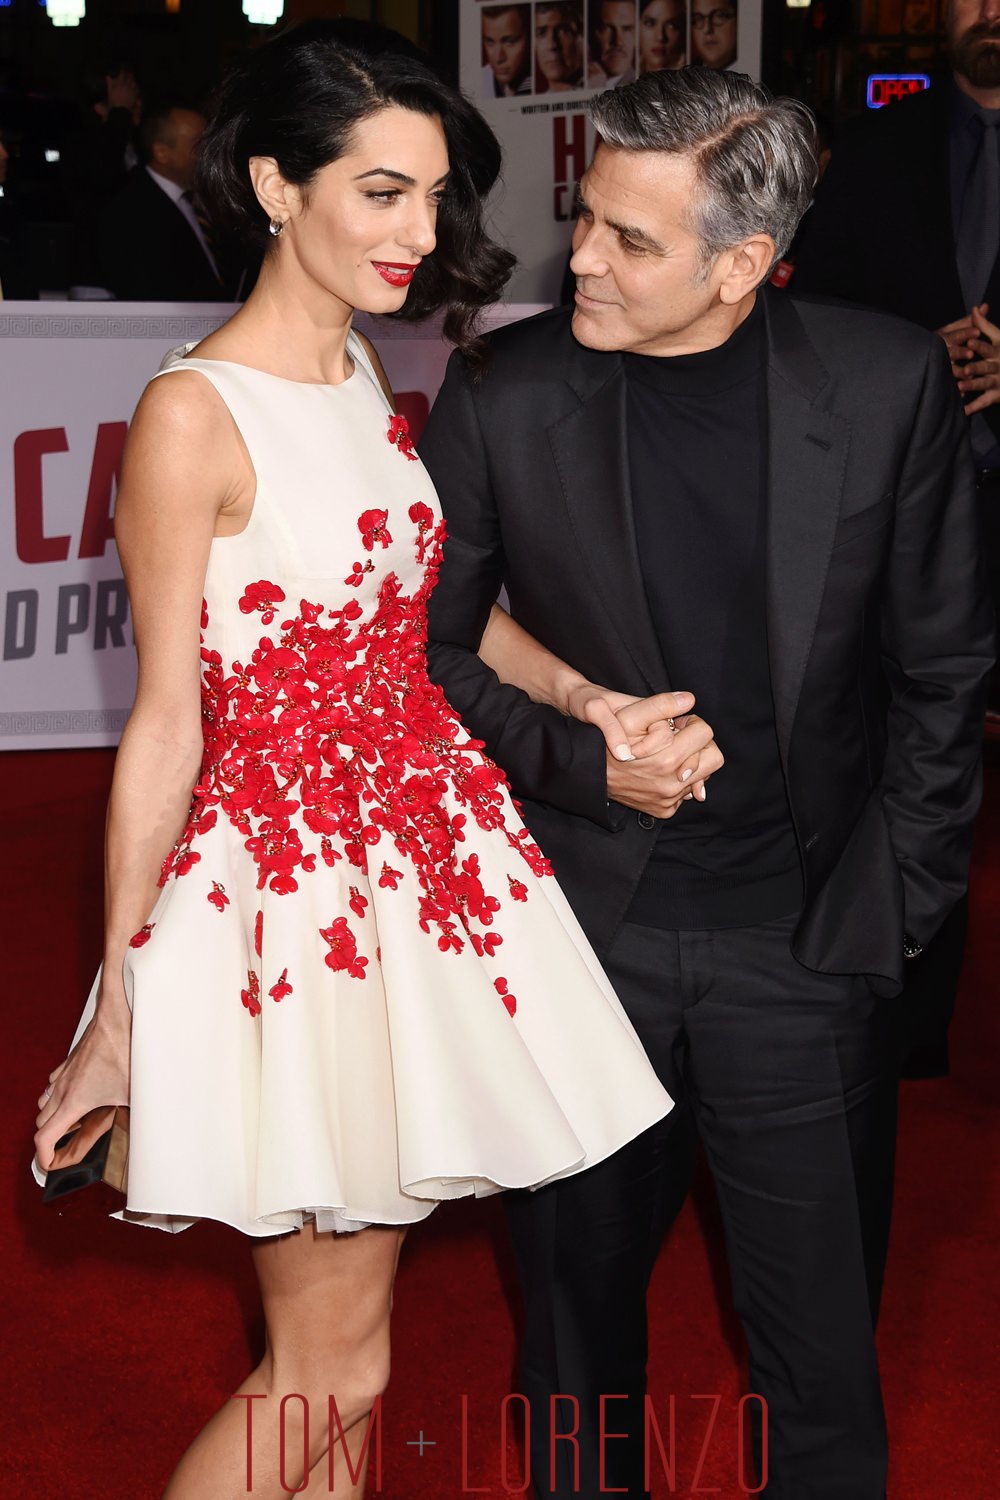 George-Clooney-Amal-Clooney-Hail-Caesar-Movie-Premiere-Red-Carpet-Fashion-Giambattista-Valli-Couture-Tom-Lorenzo-Site (1)